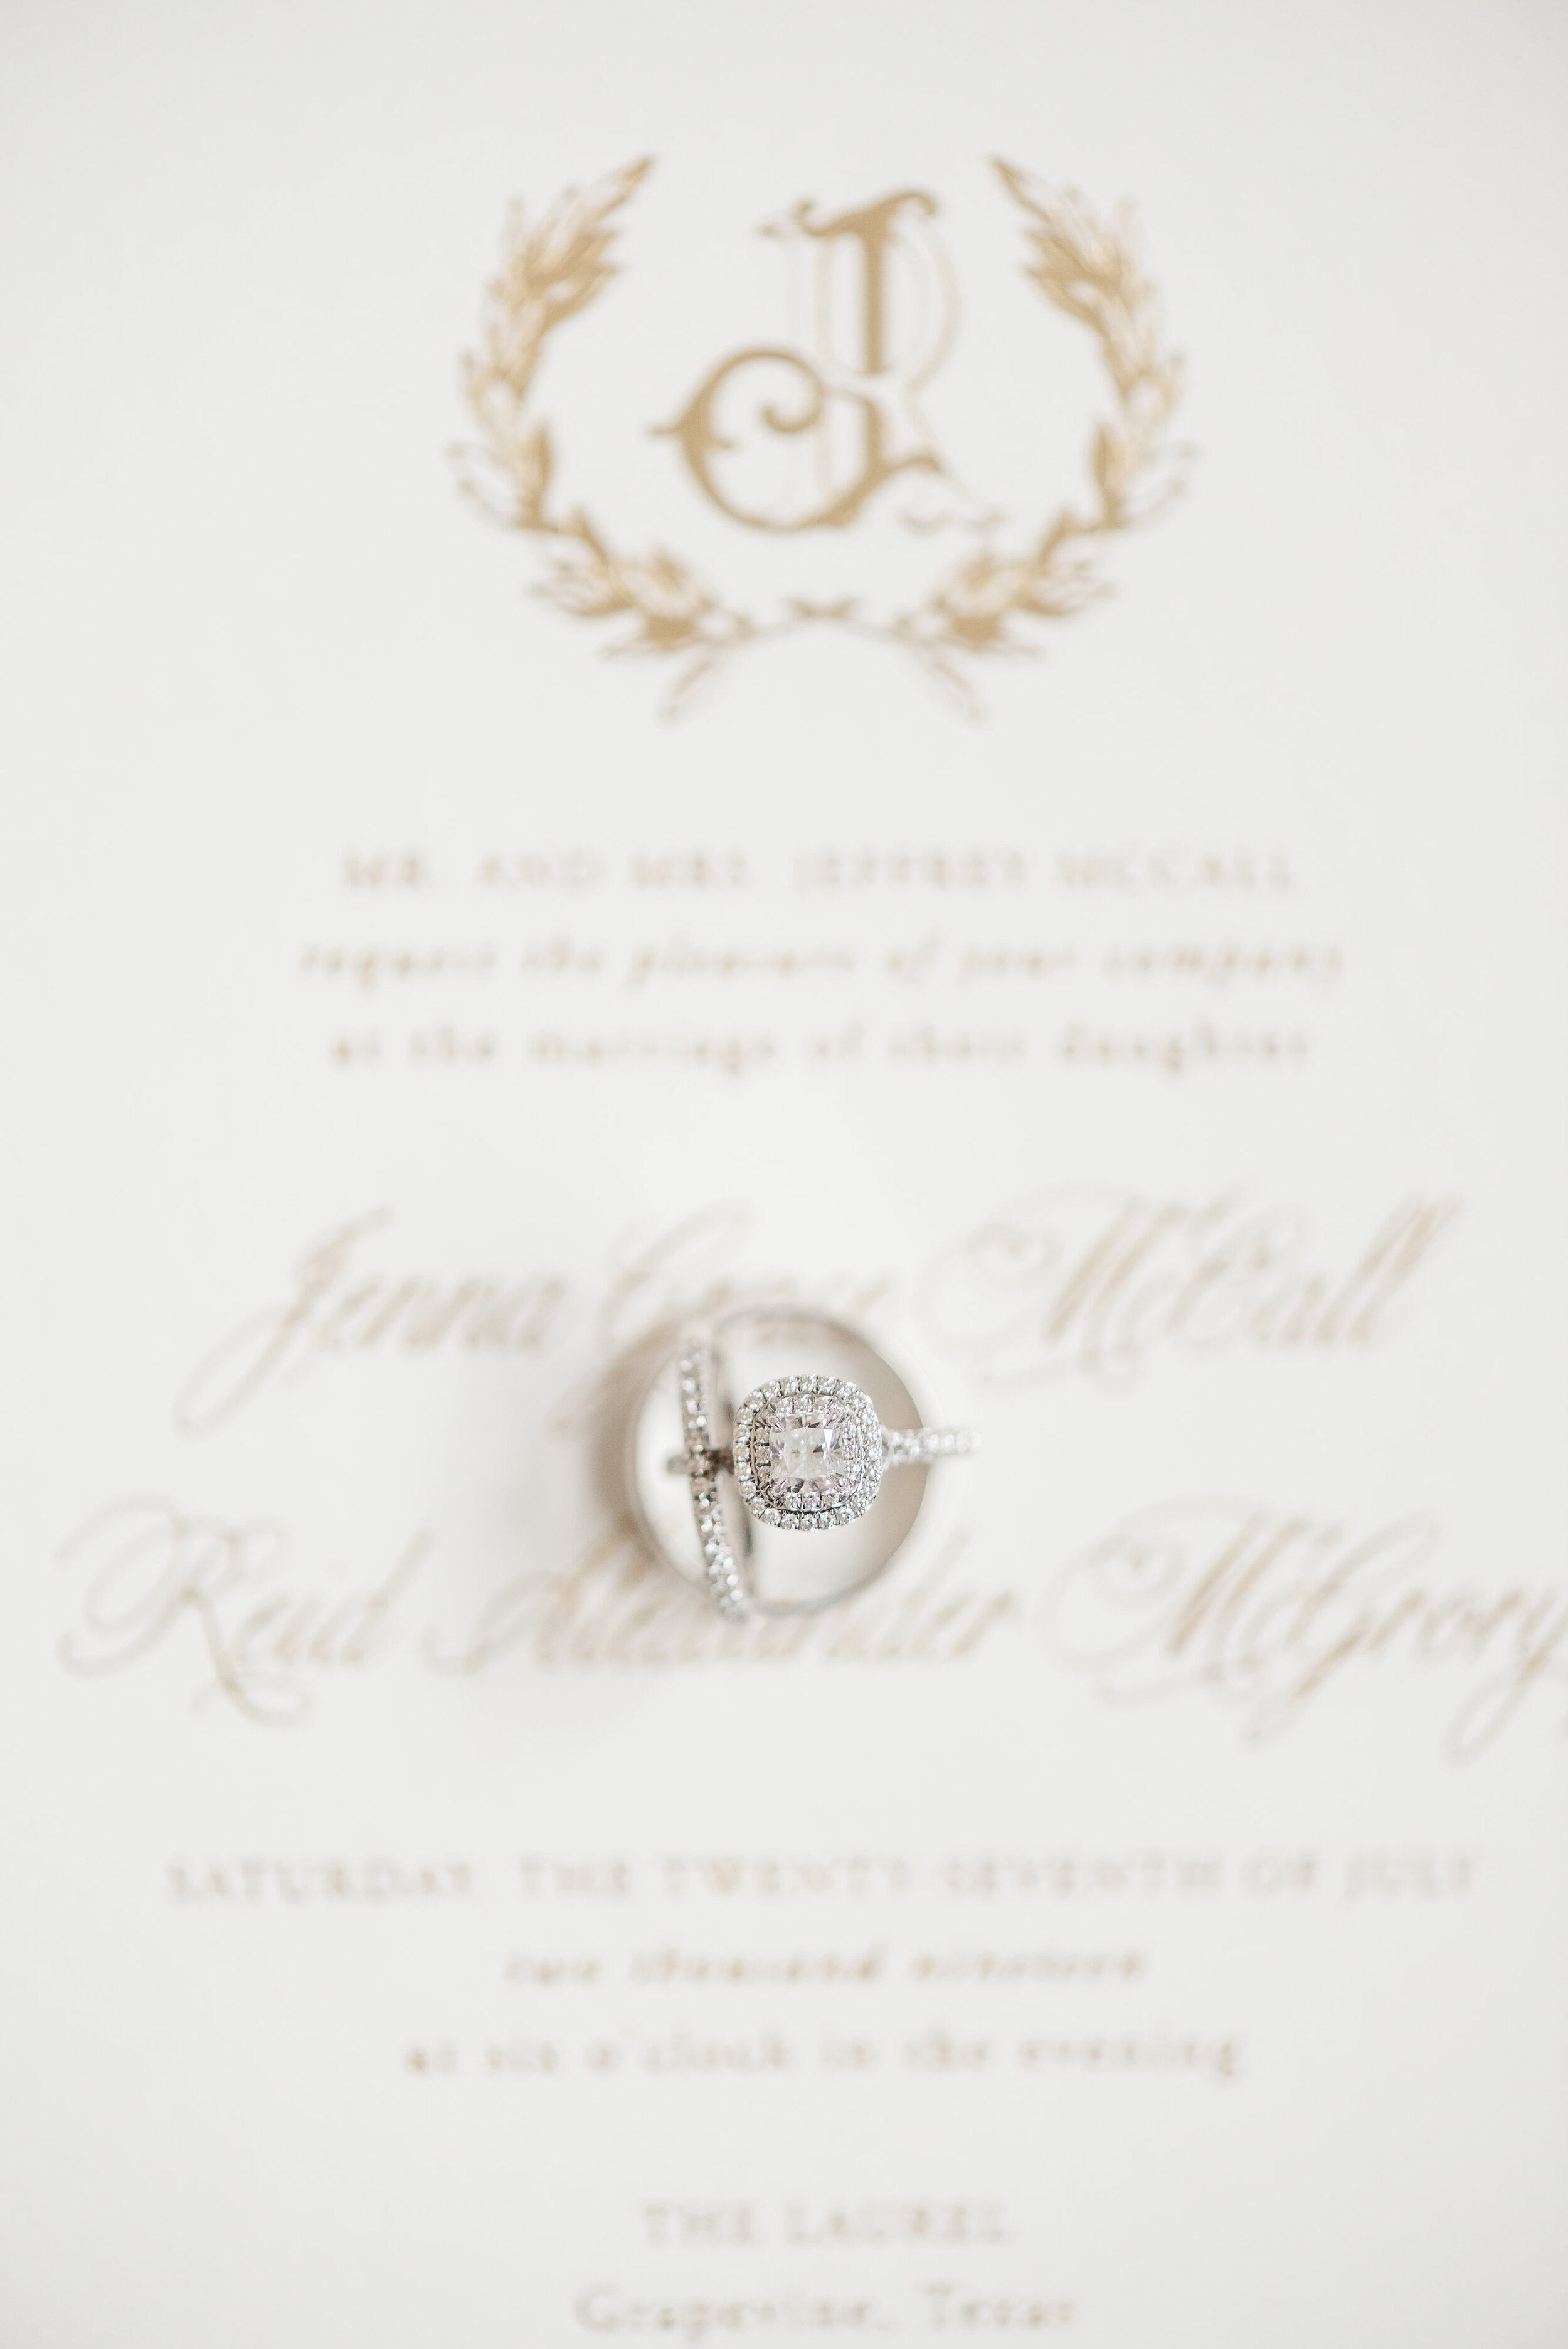 custom gold foil wedding invitations- - pink champagne paper